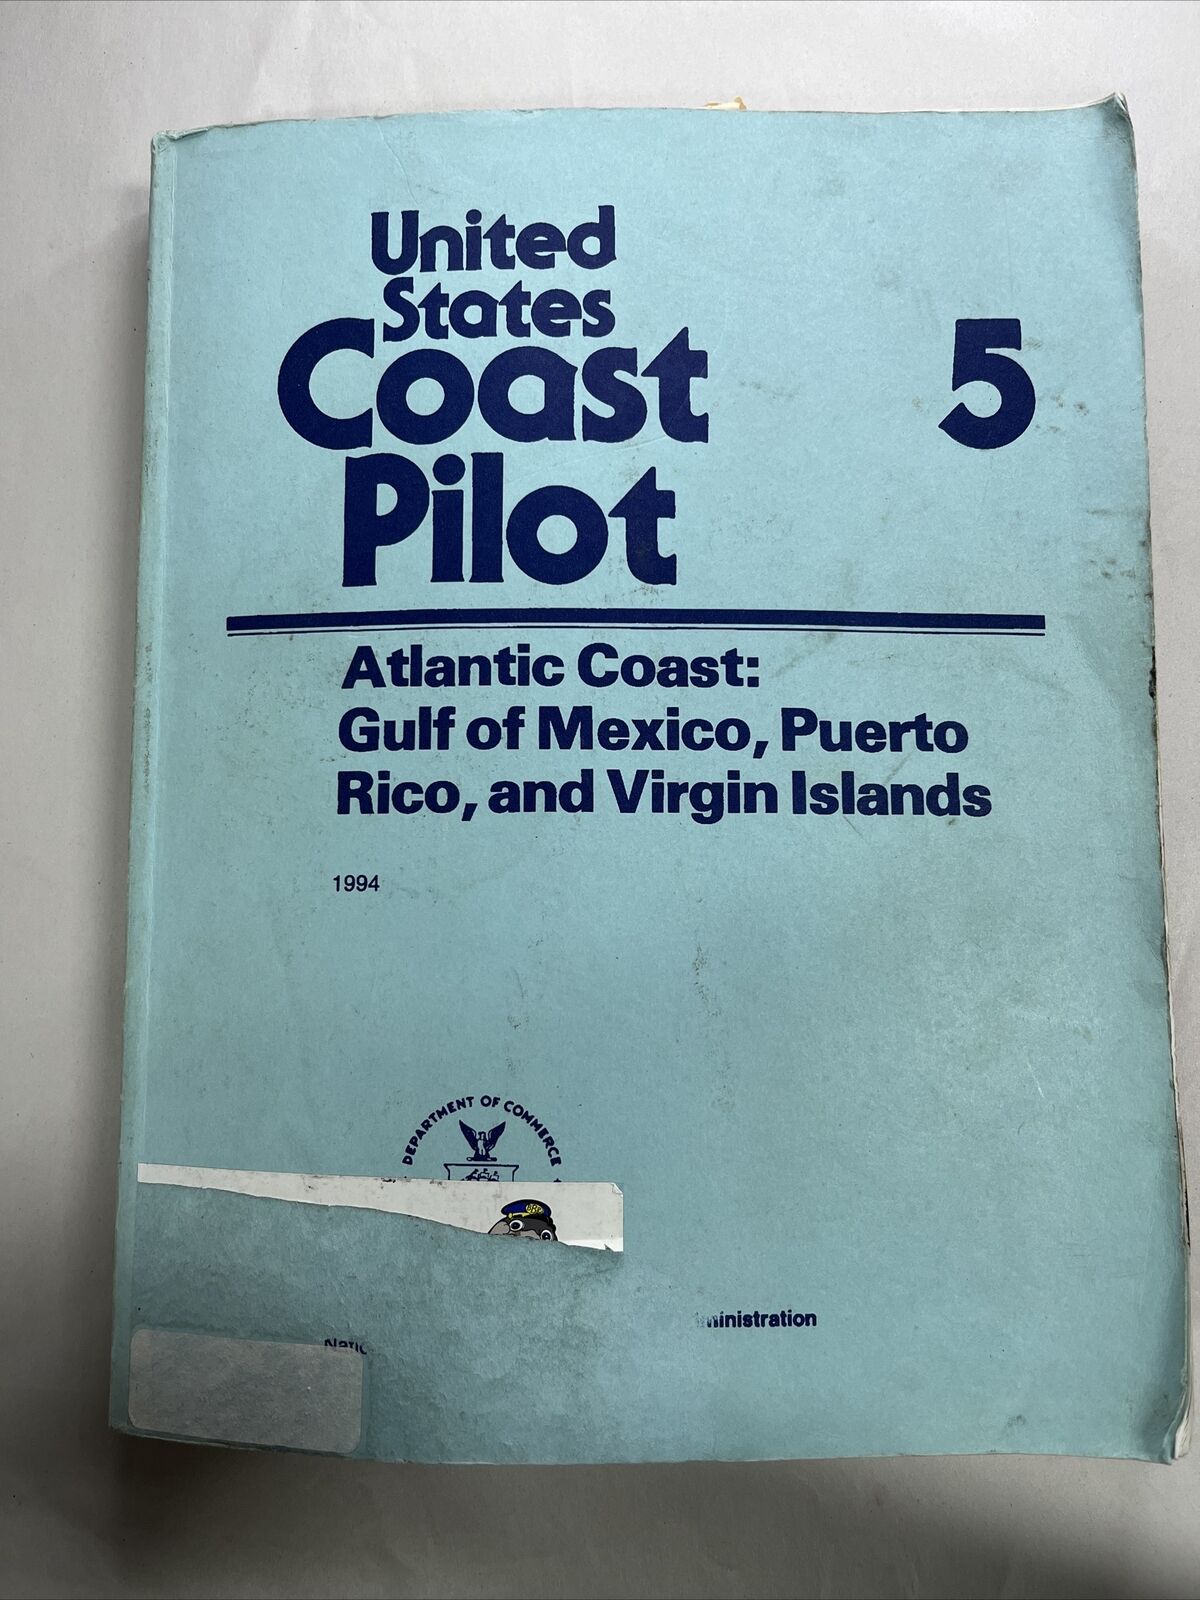 US Coast Pilot, Department of Commerce, 1994